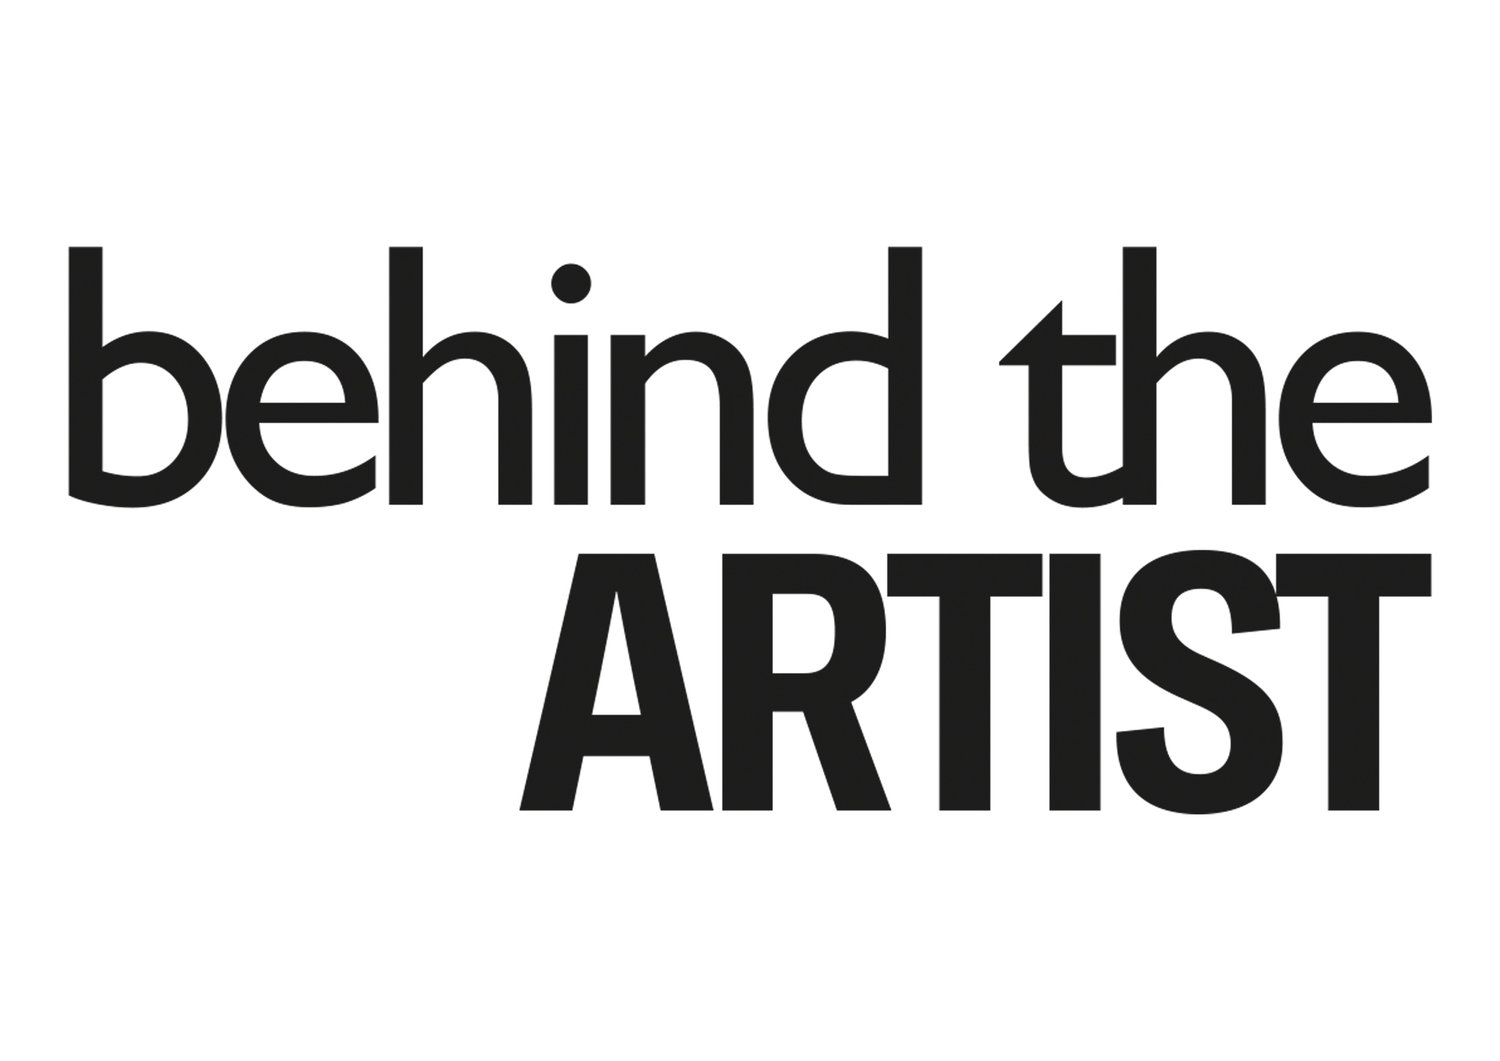 Behind The Artist